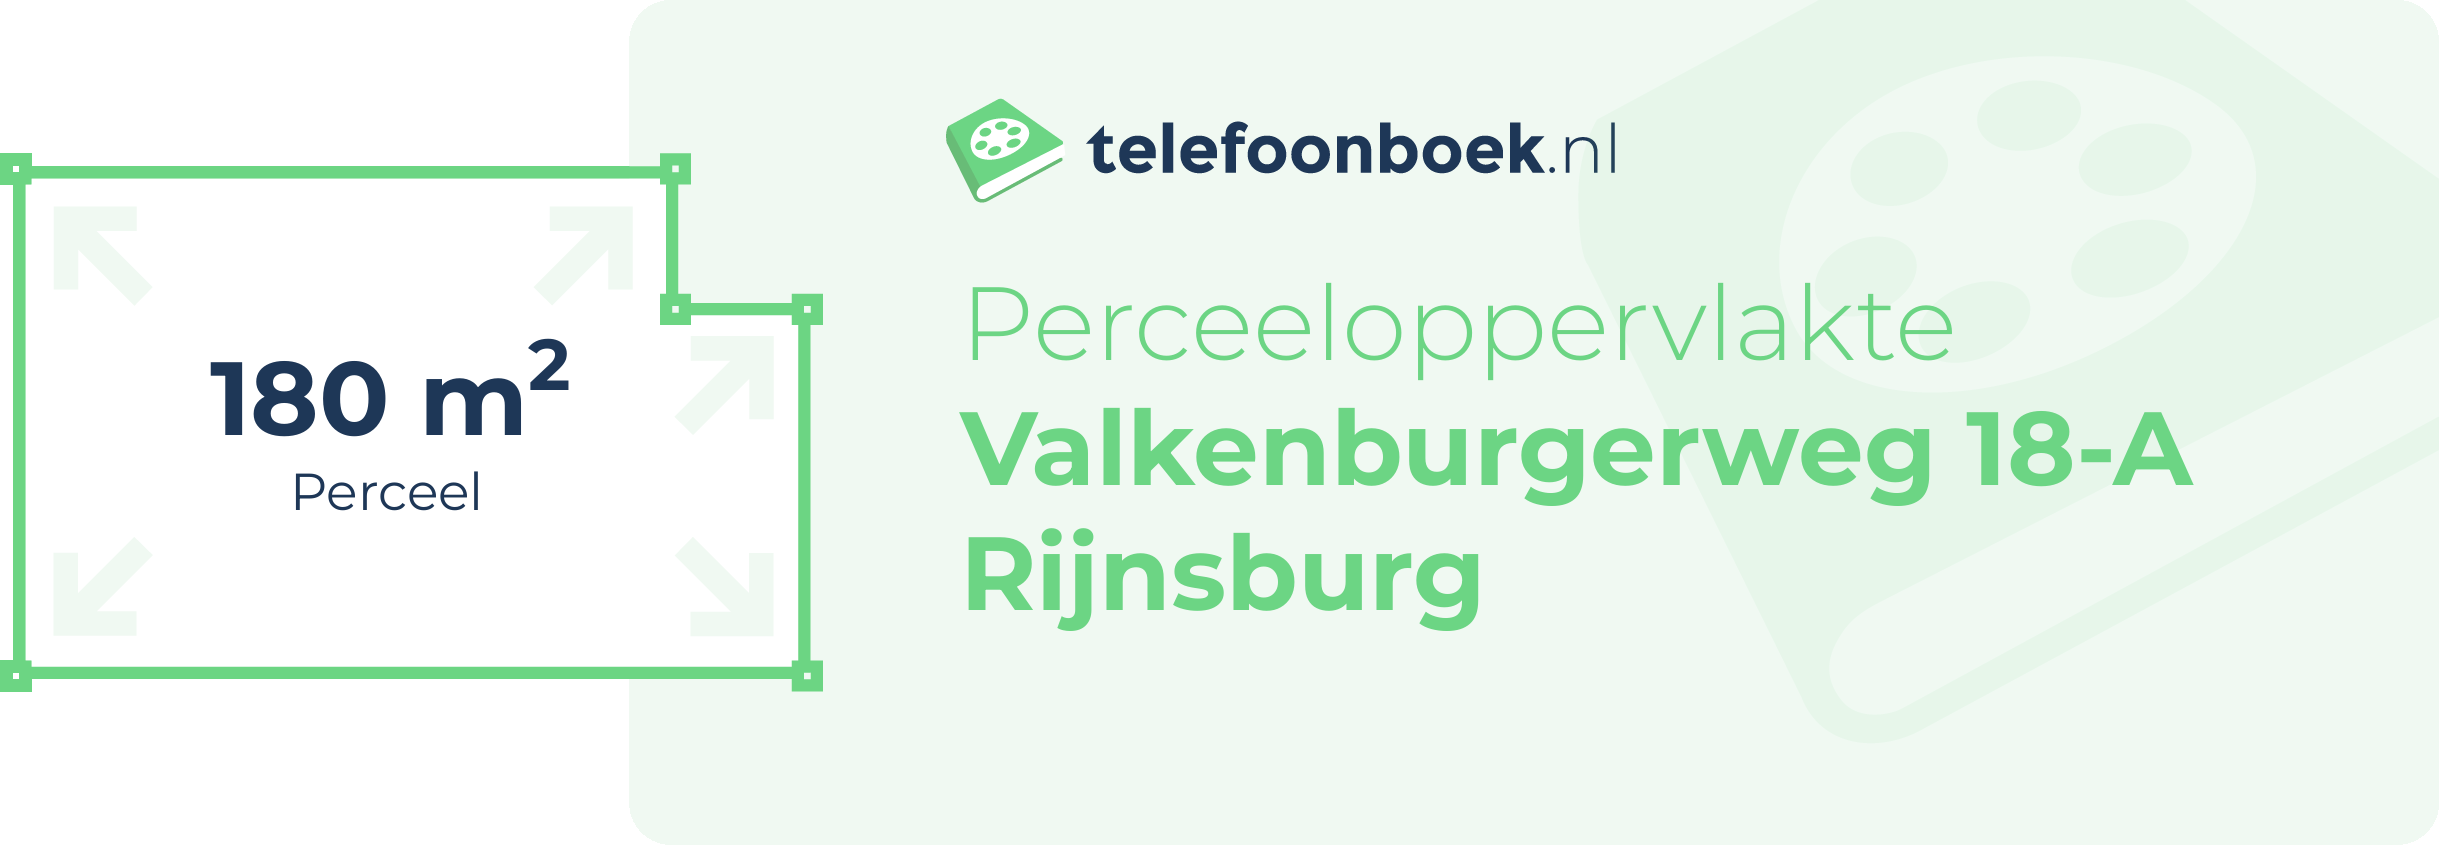 Perceeloppervlakte Valkenburgerweg 18-A Rijnsburg